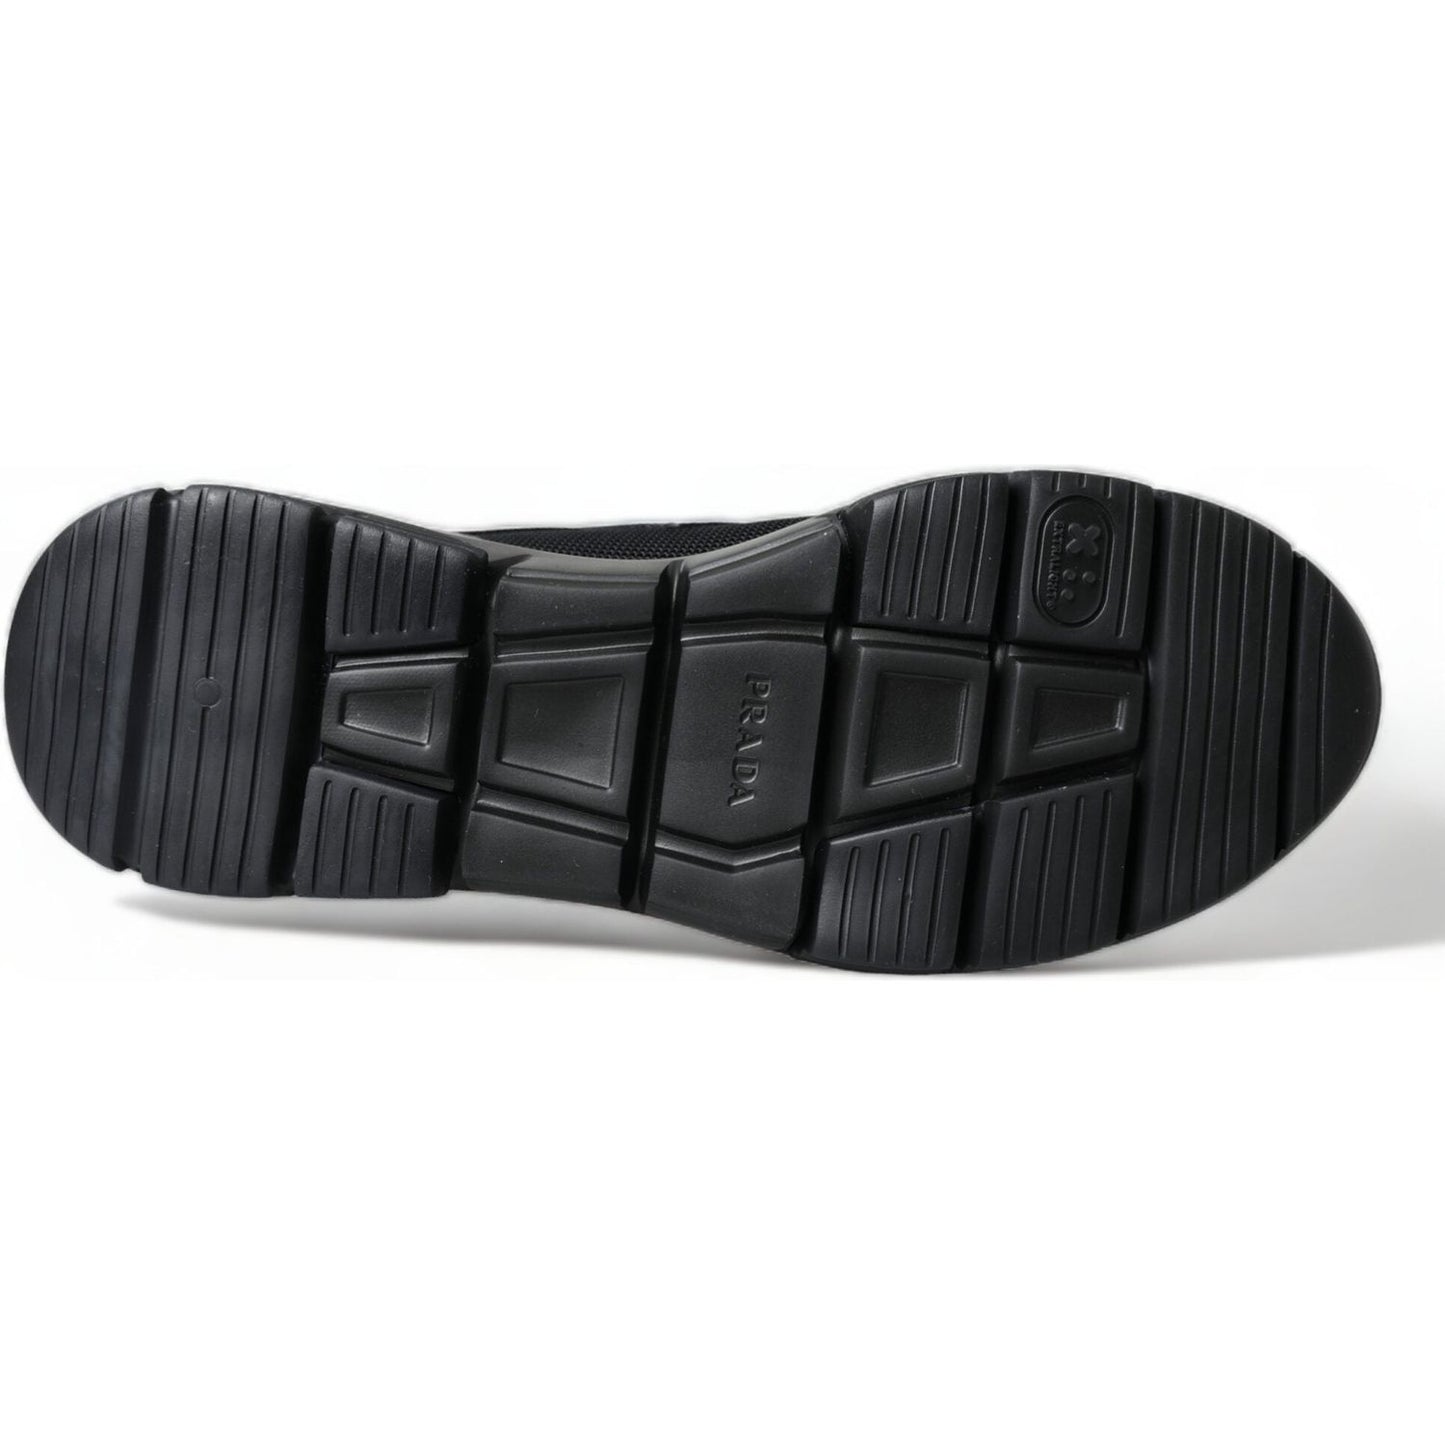 Prada Sleek Low Top Leather Sneakers in Timeless Black black-mesh-panel-low-top-twist-trainers-sneakers-shoes 465A4093-BG-scaled-fe3074c7-d06.jpg